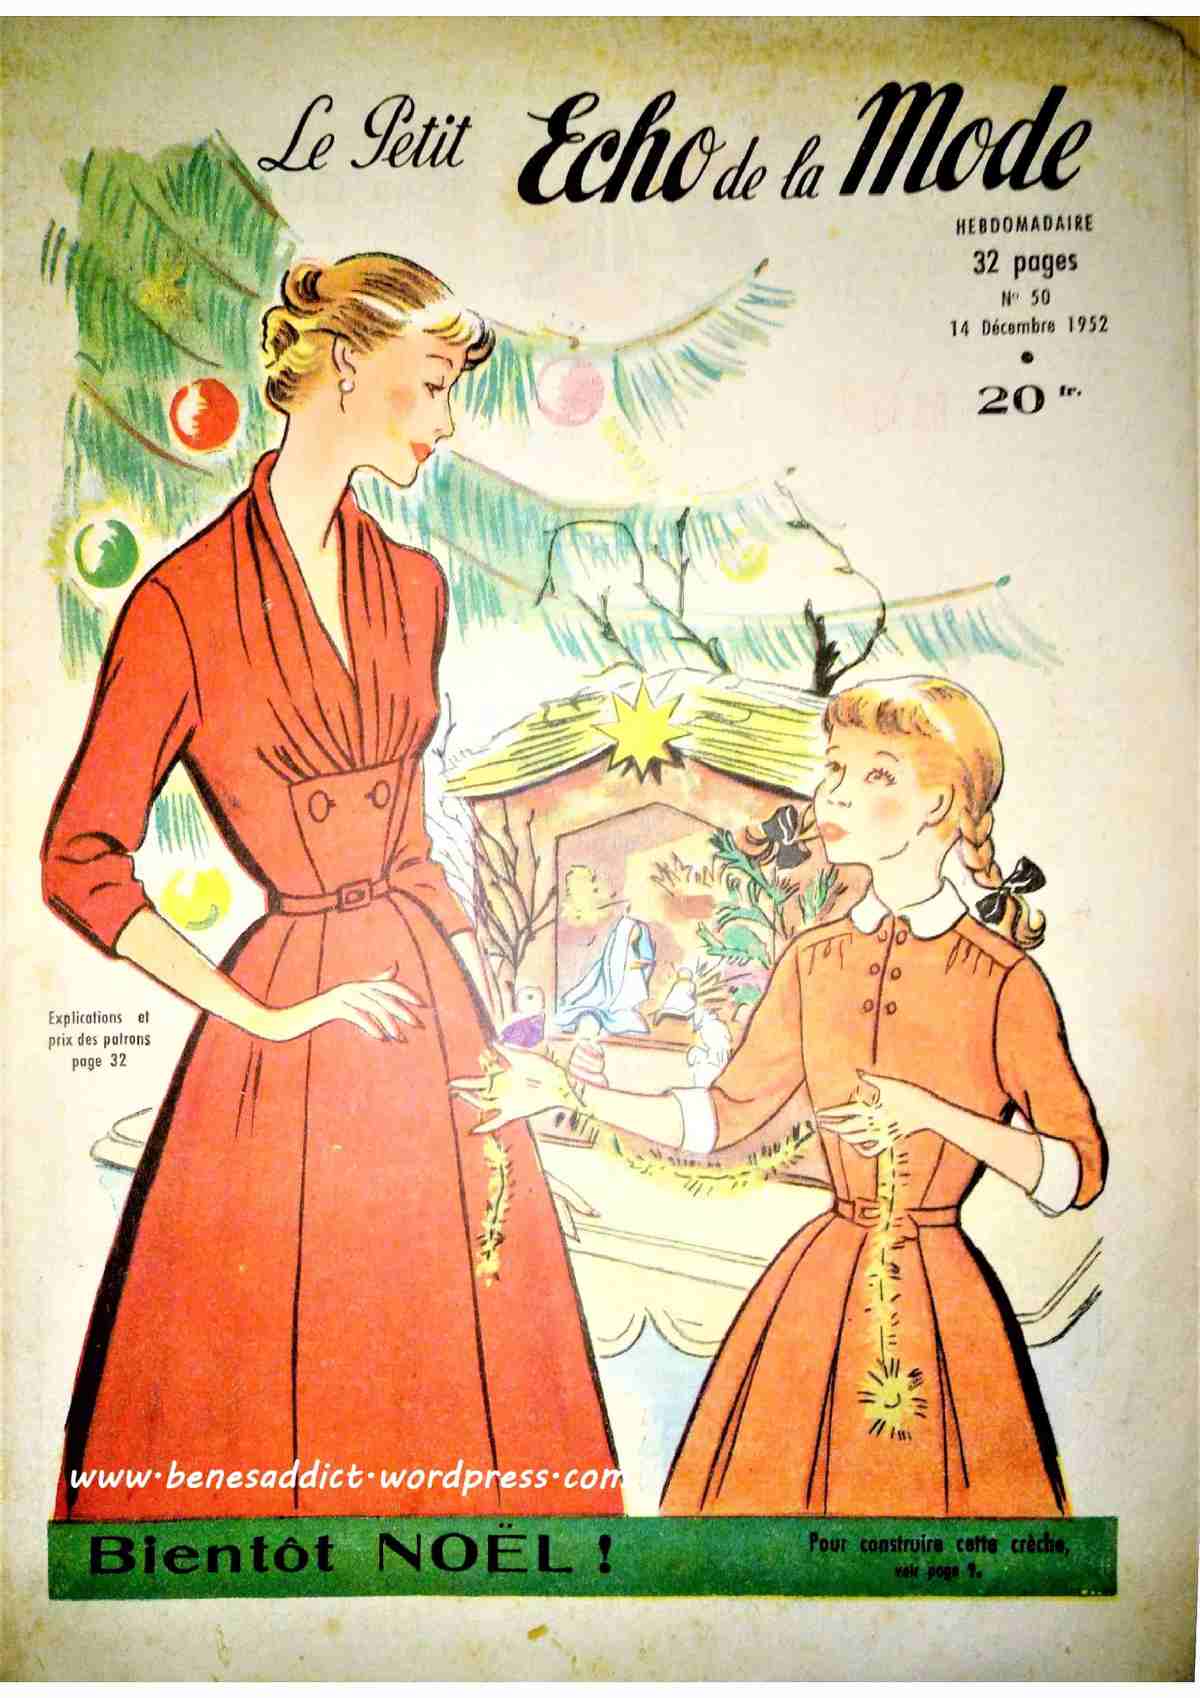 Petit echo de la mode Decembre 1952 (18)-min.jpg